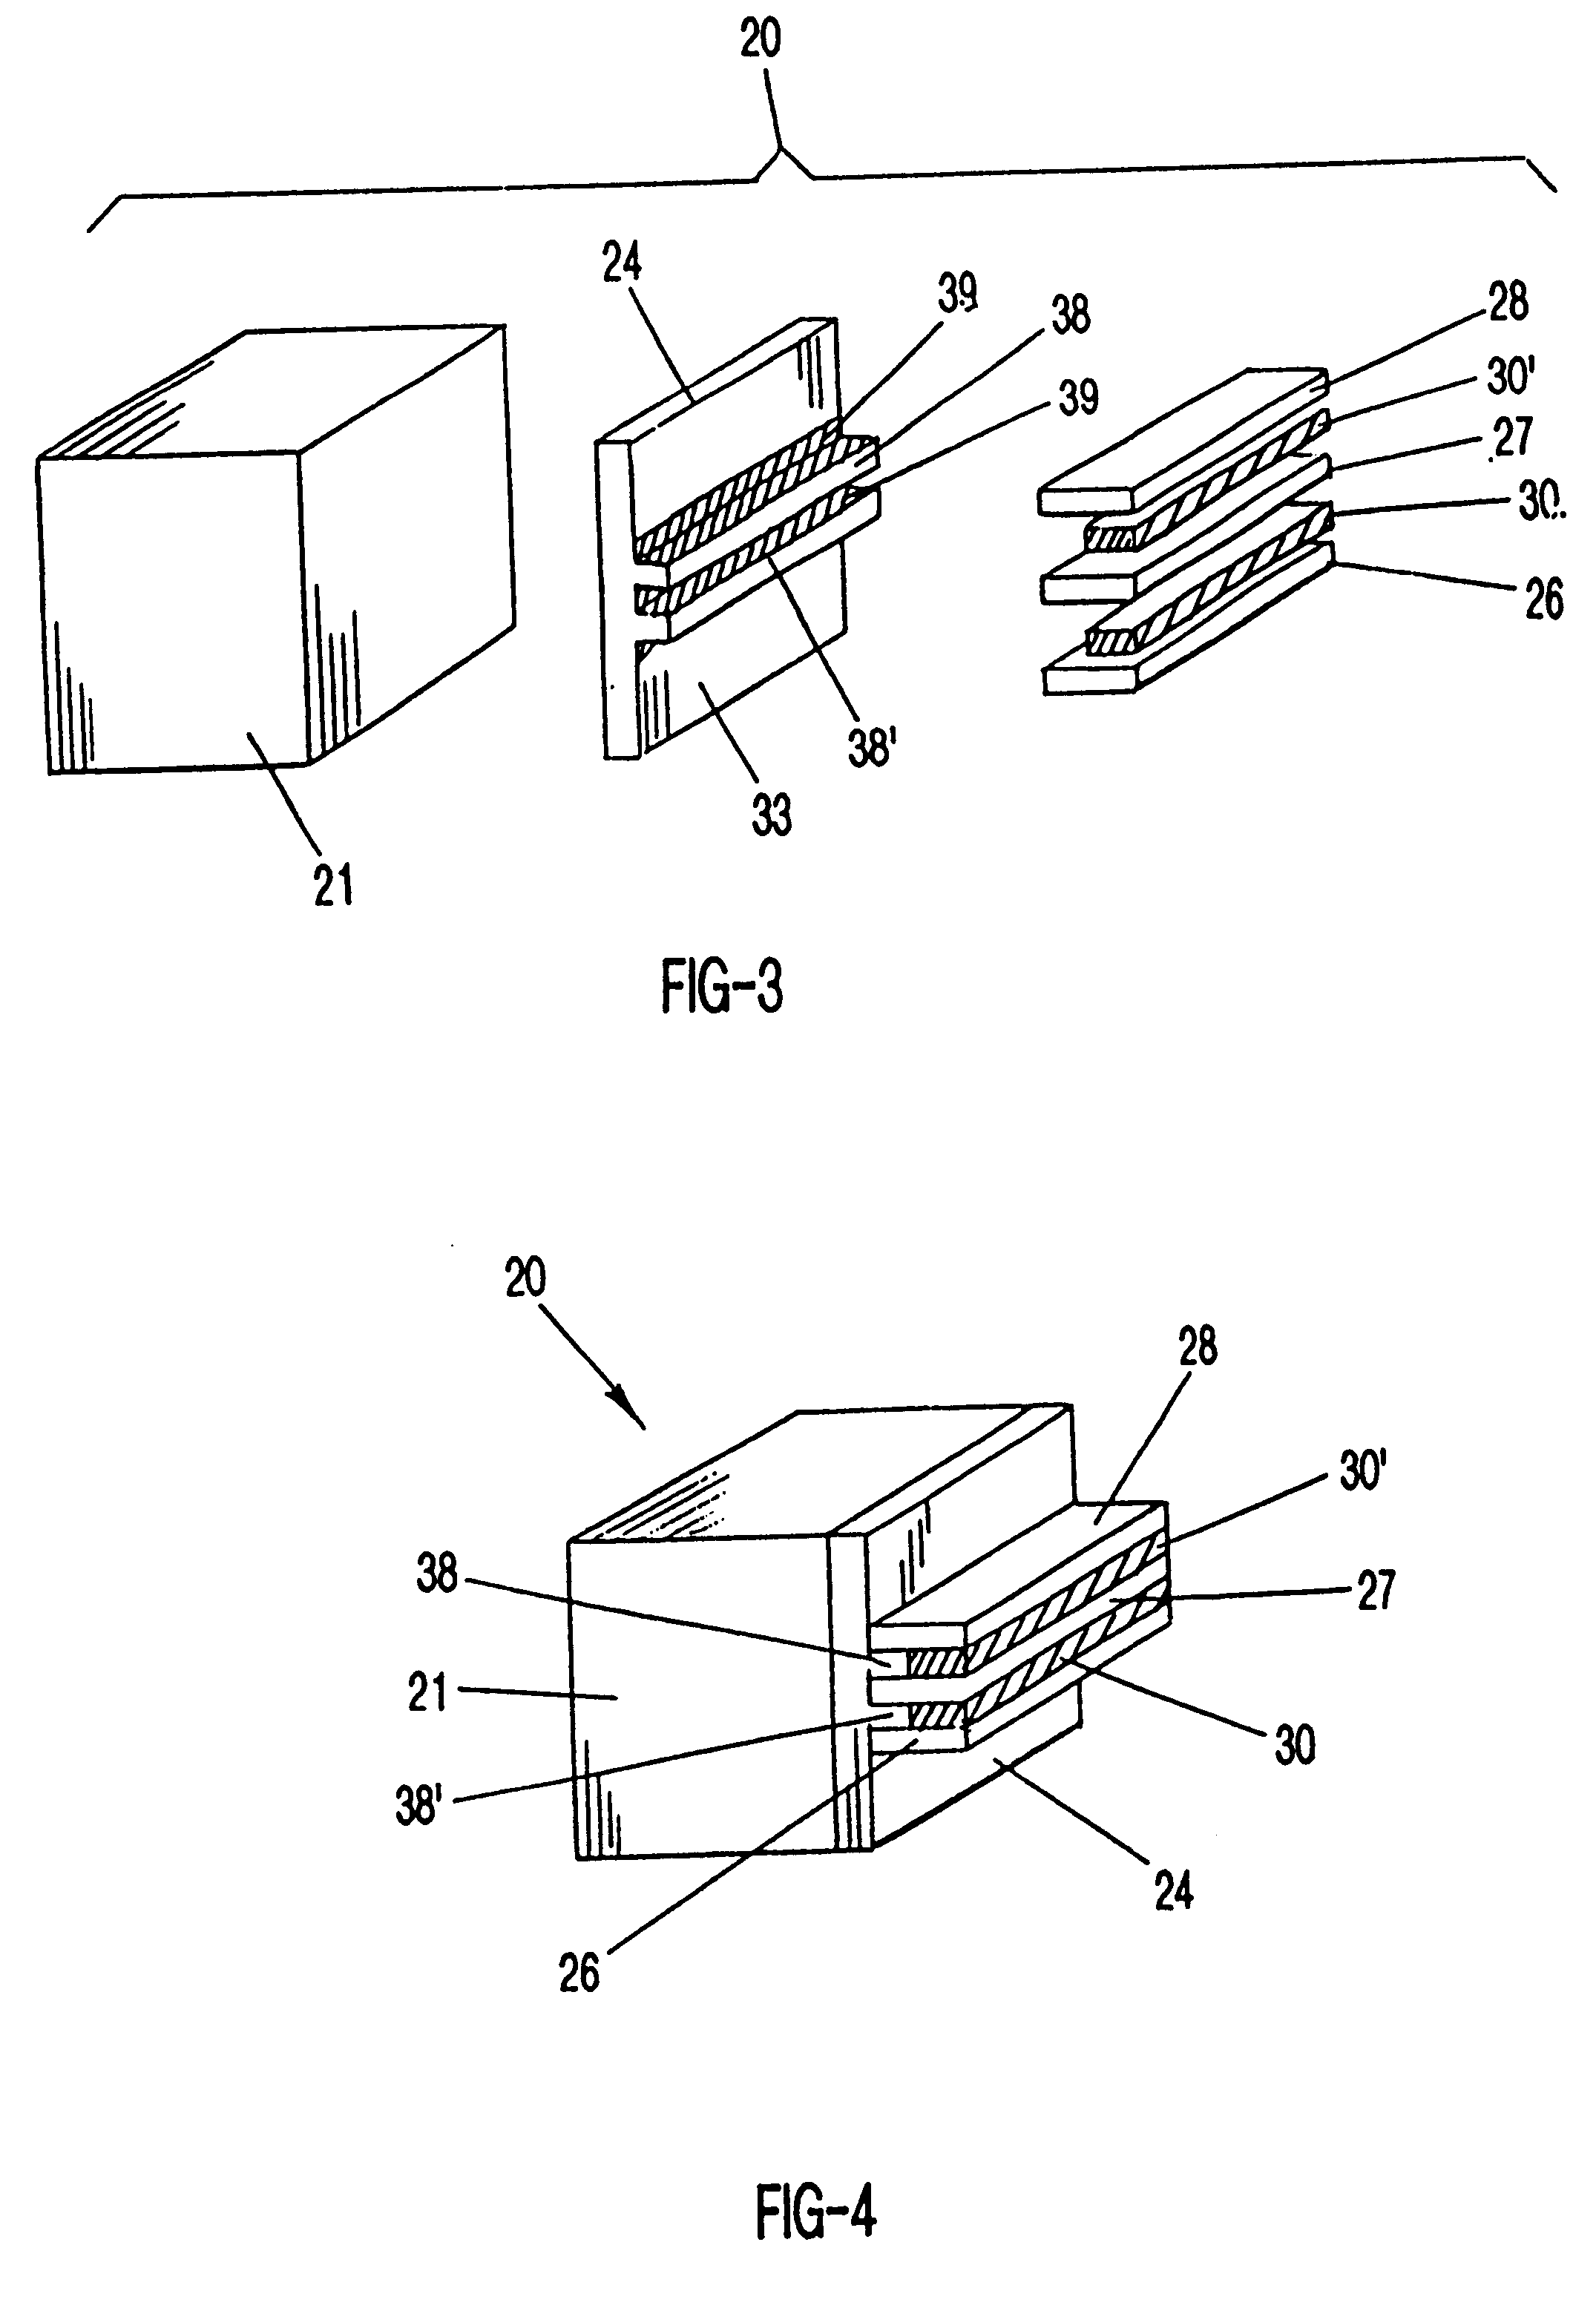 Method for modular laser diode assembly